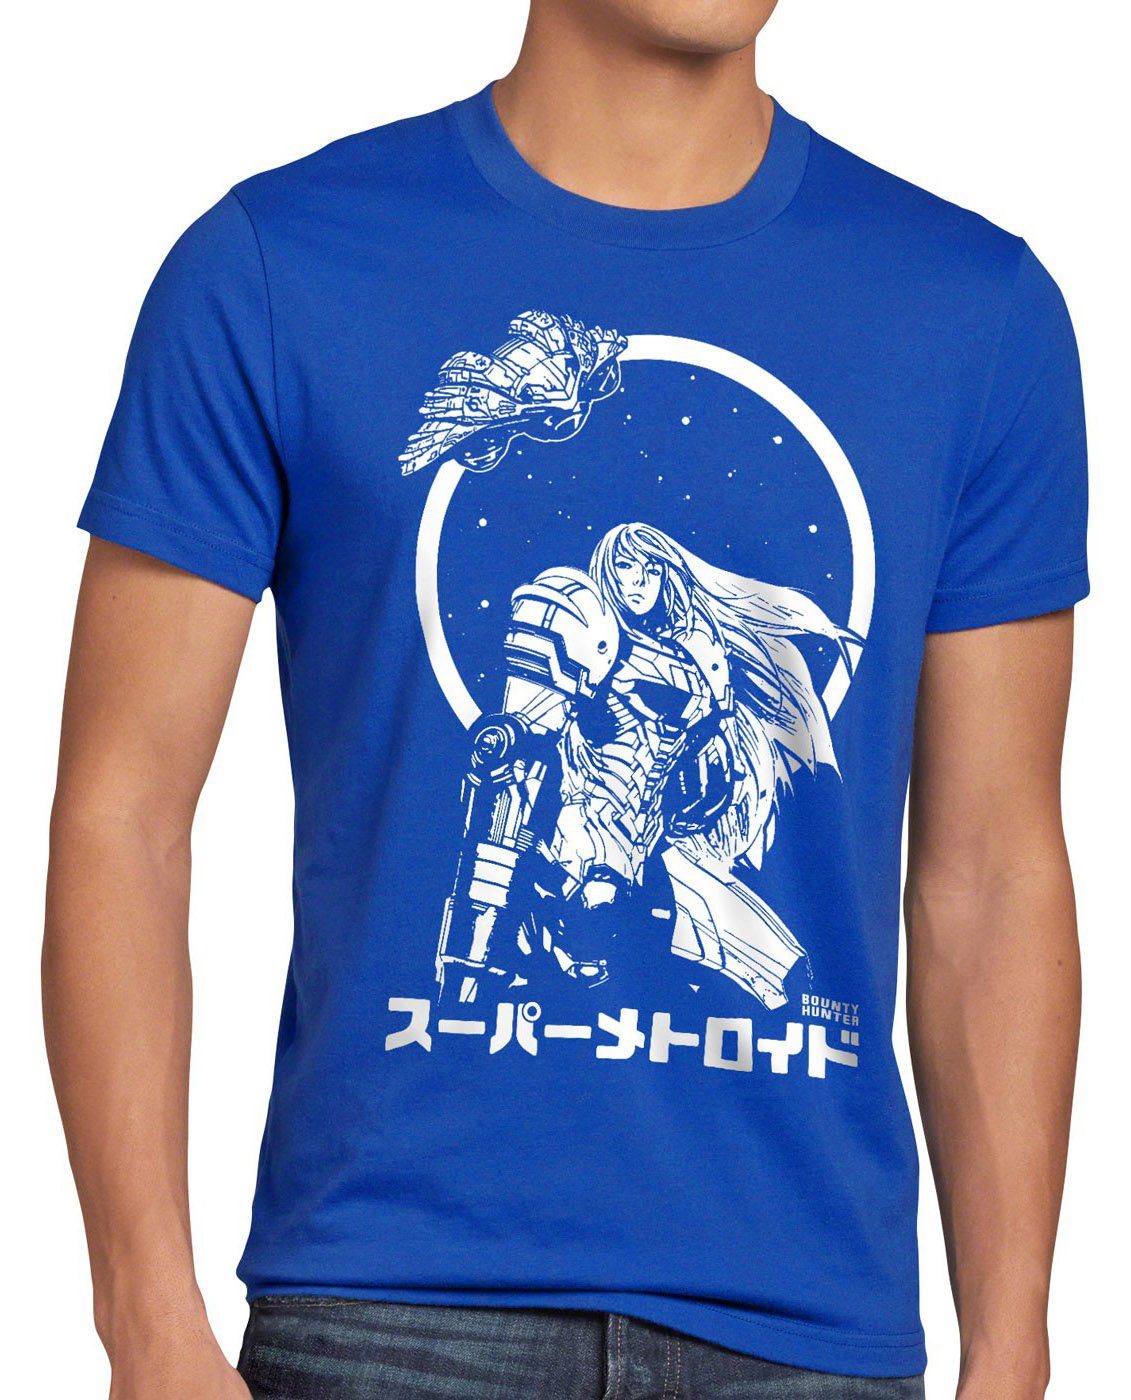 style3 Print-Shirt Herren T-Shirt Samus Return metroid nerd gamer nes snes geek blau